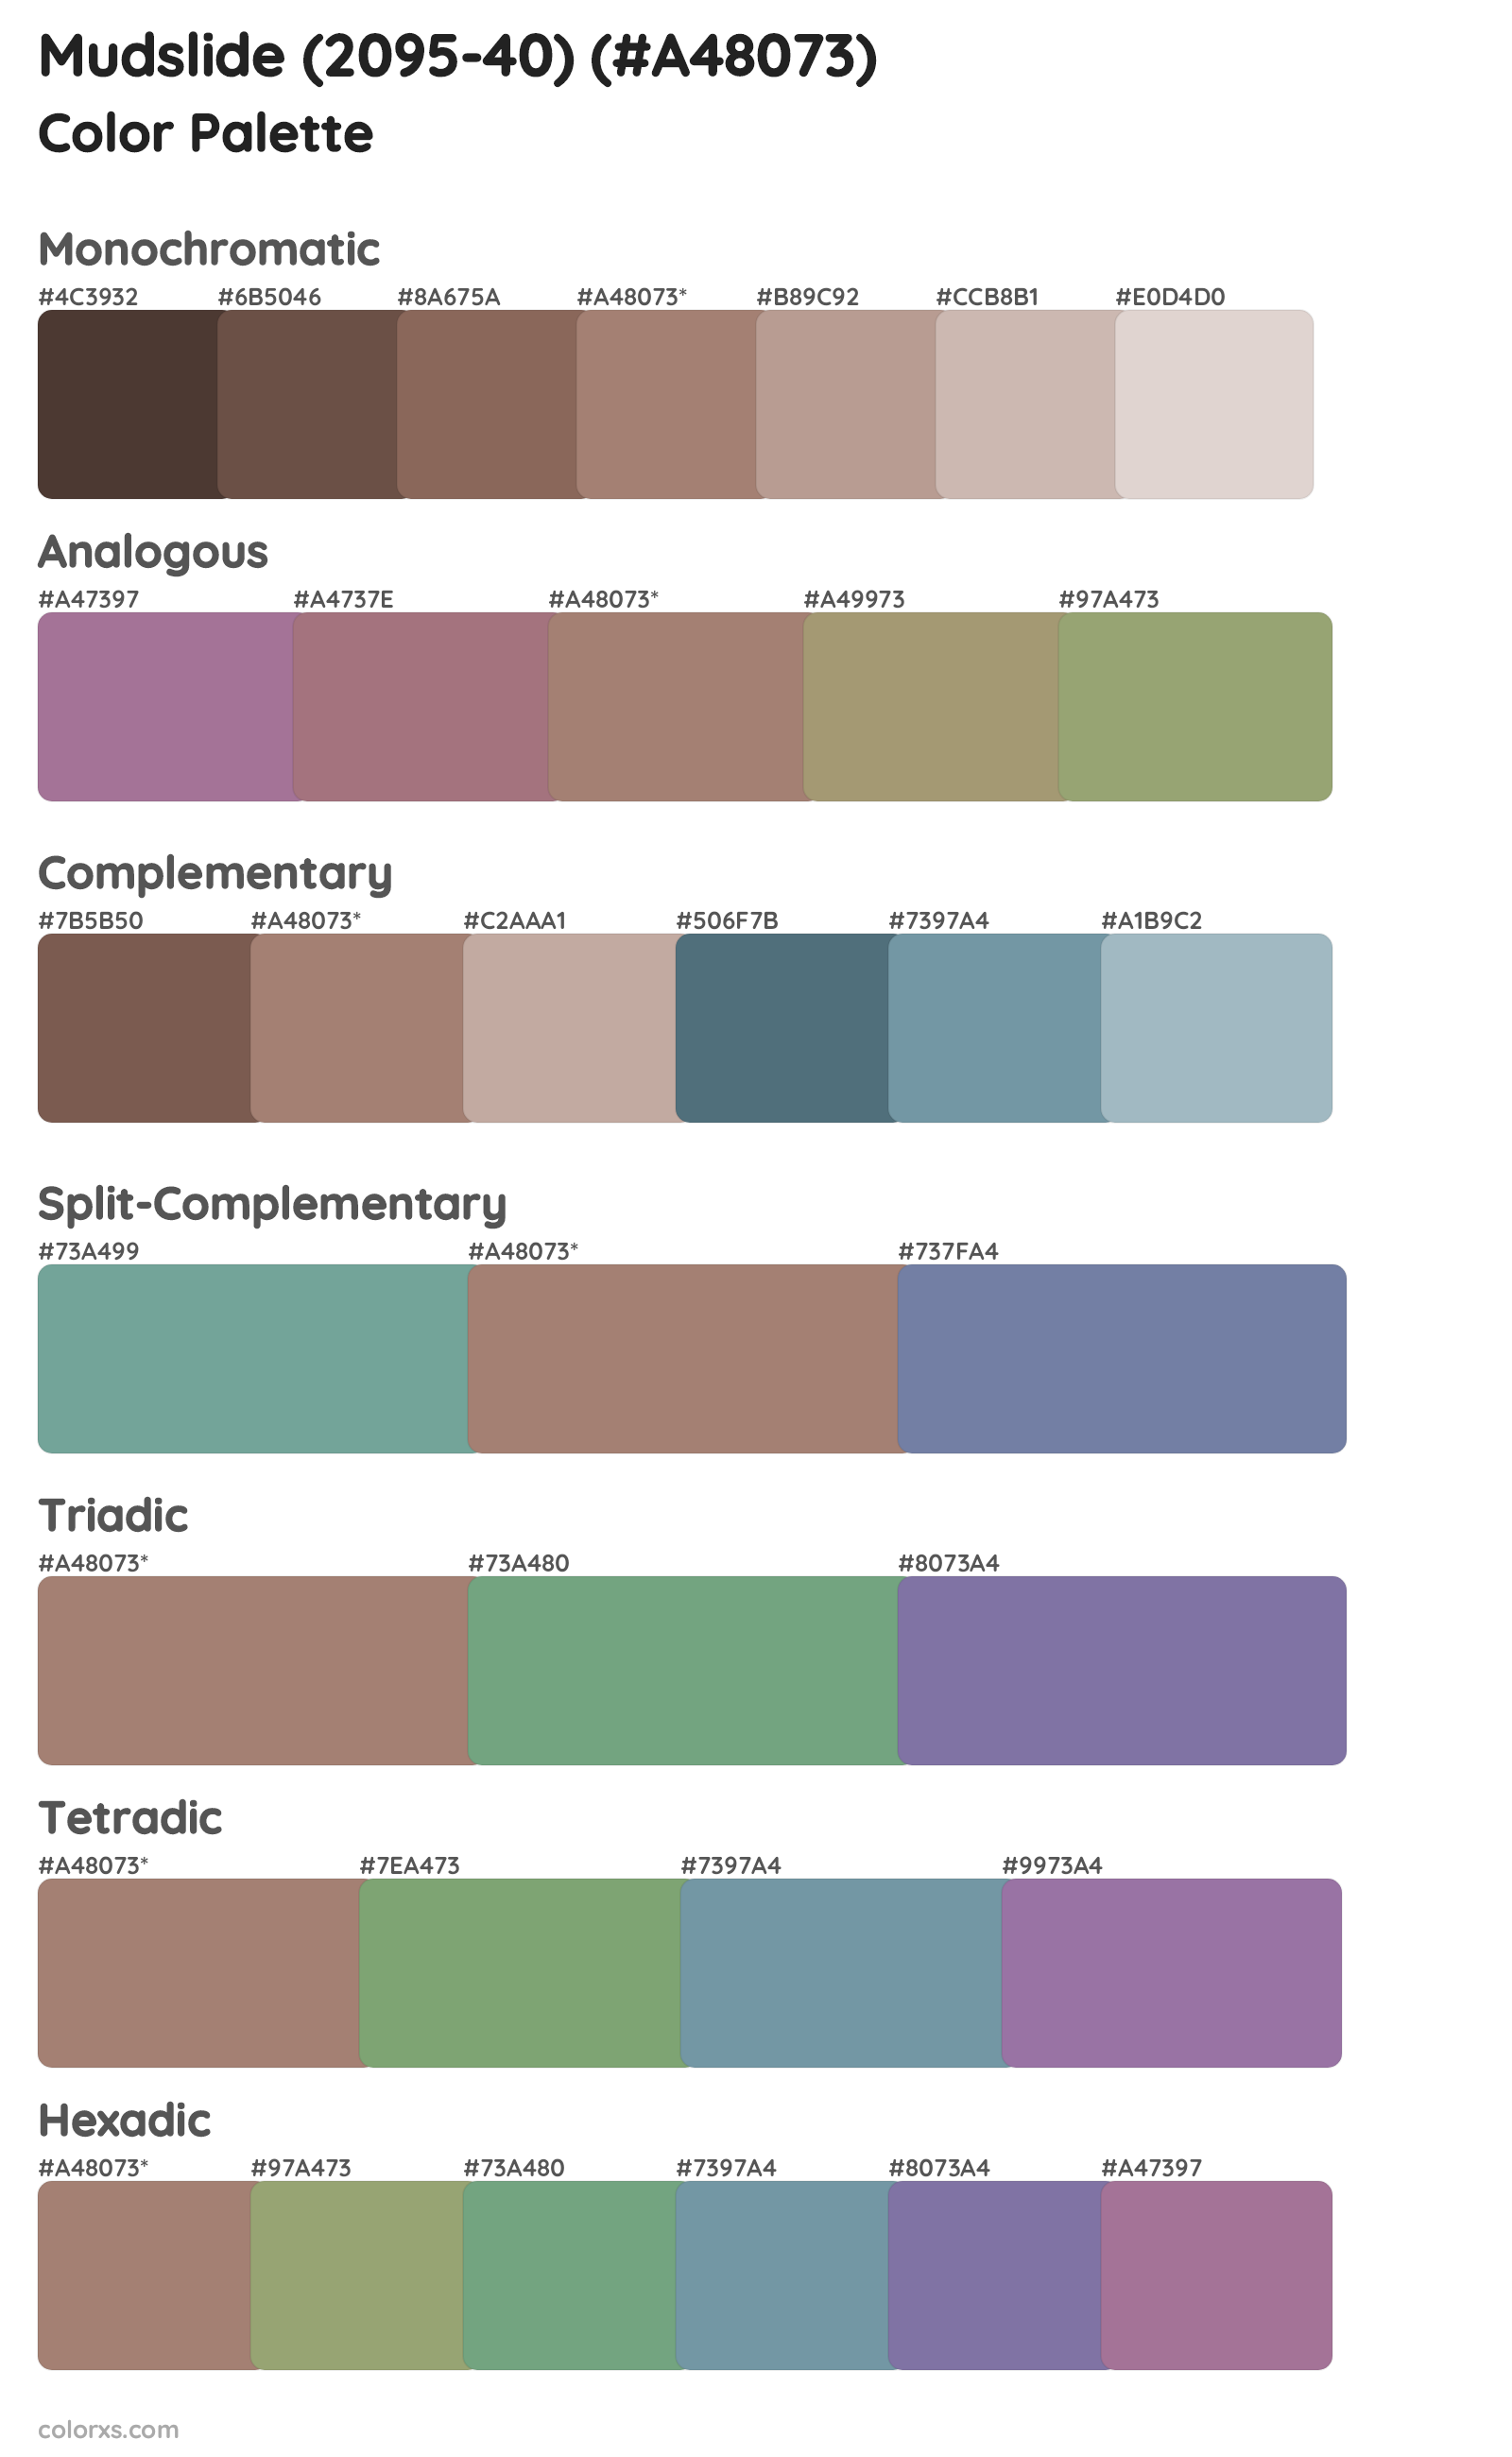 Mudslide (2095-40) Color Scheme Palettes